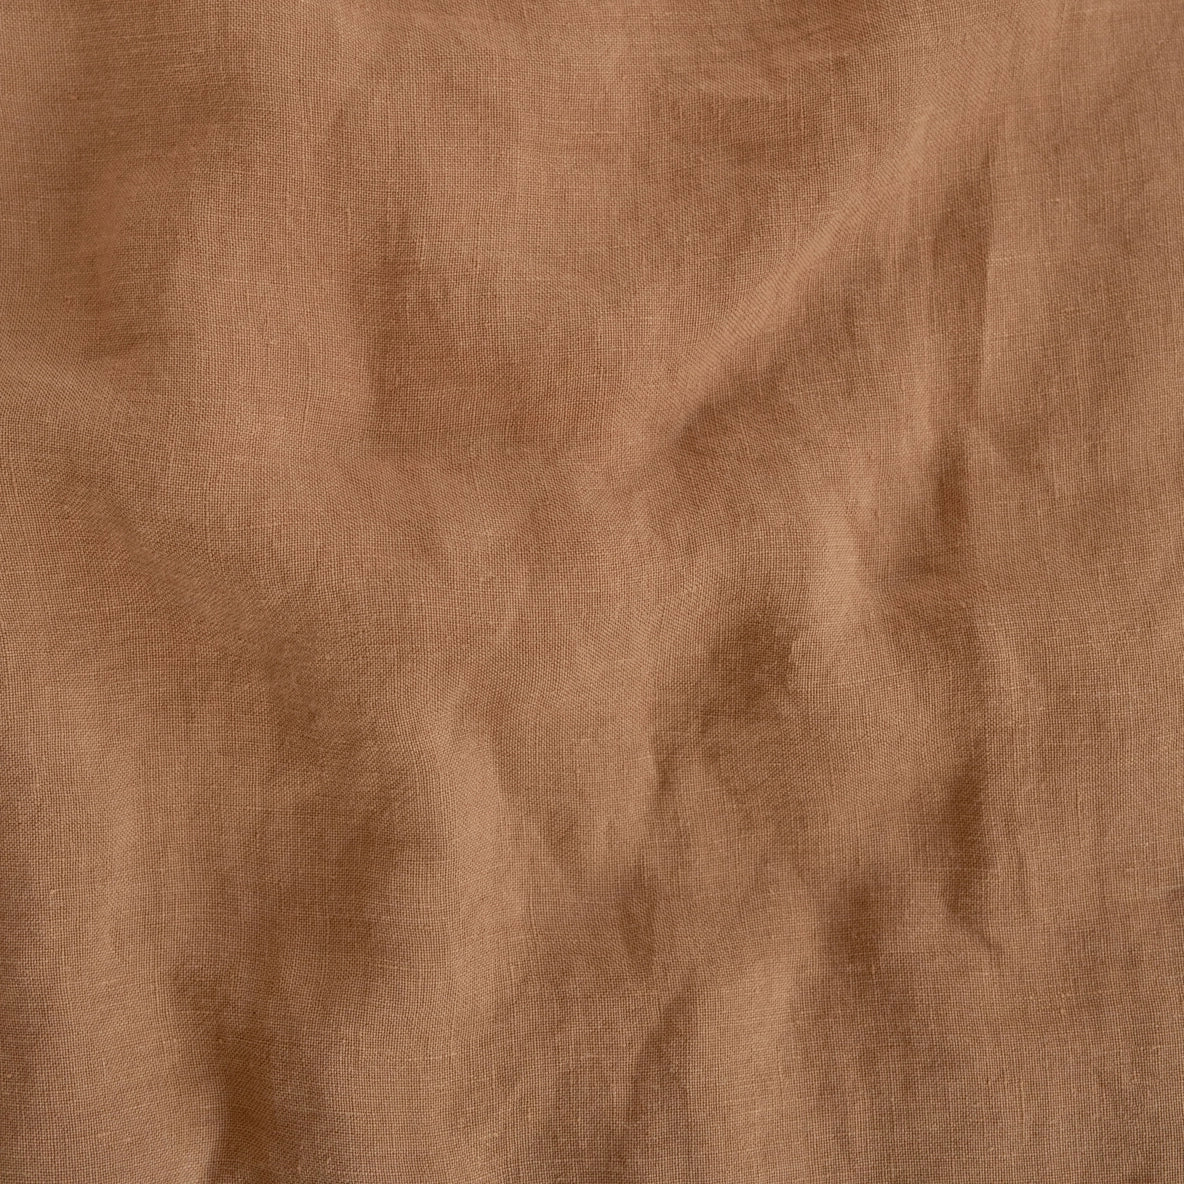 Camel Linen Duvet Cover Set